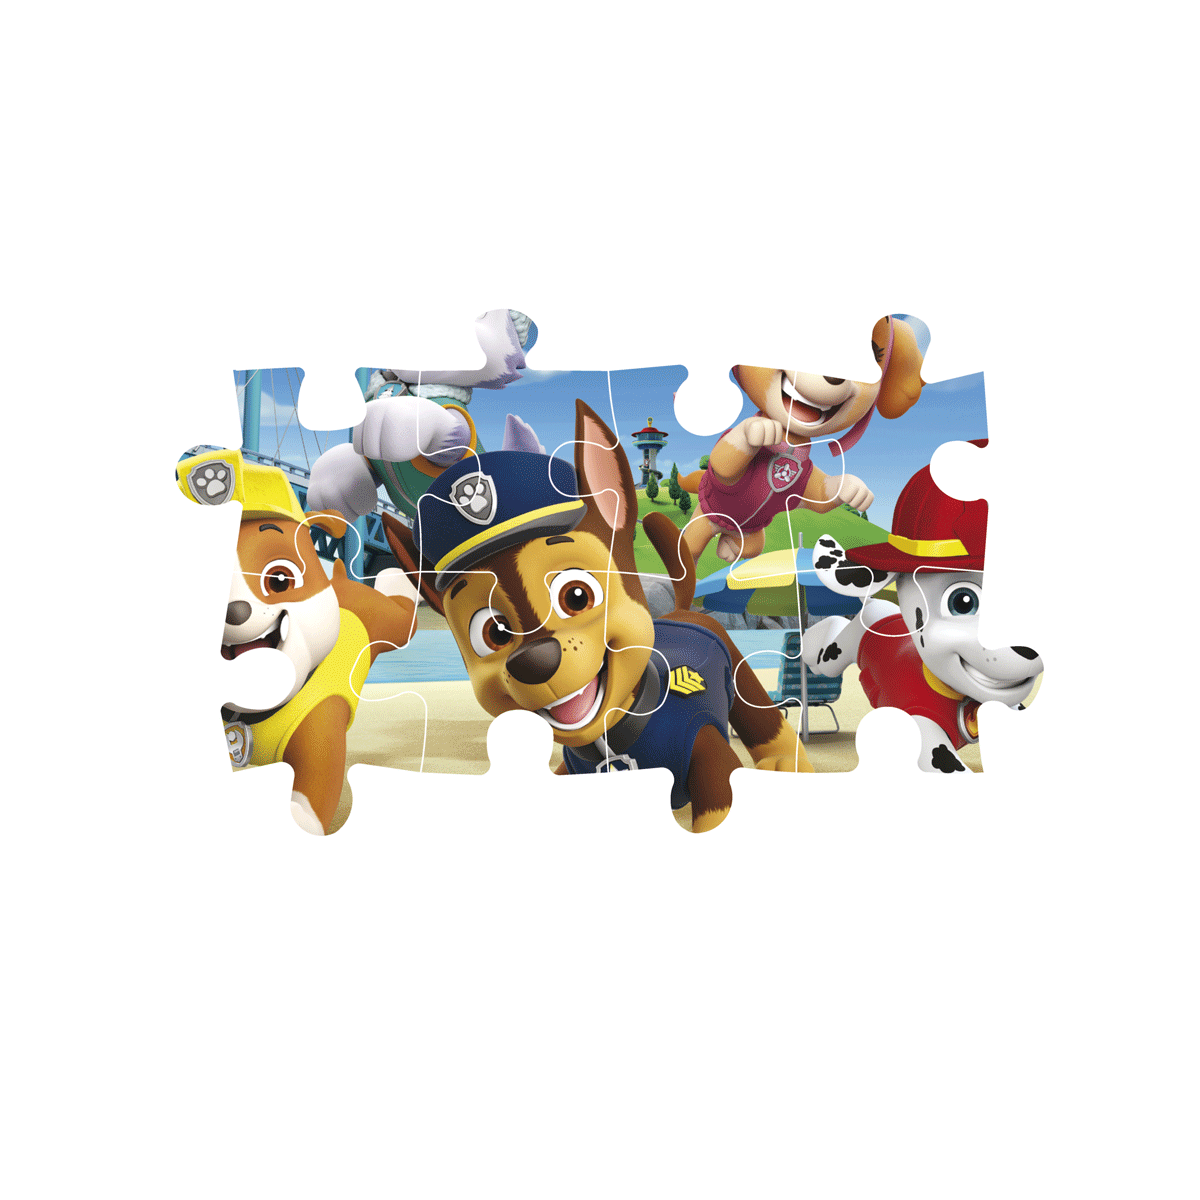 Clementoni supercolor puzzle paw patrol - 60 maxi pezzi, puzzle bambini 4 anni - CLEMENTONI